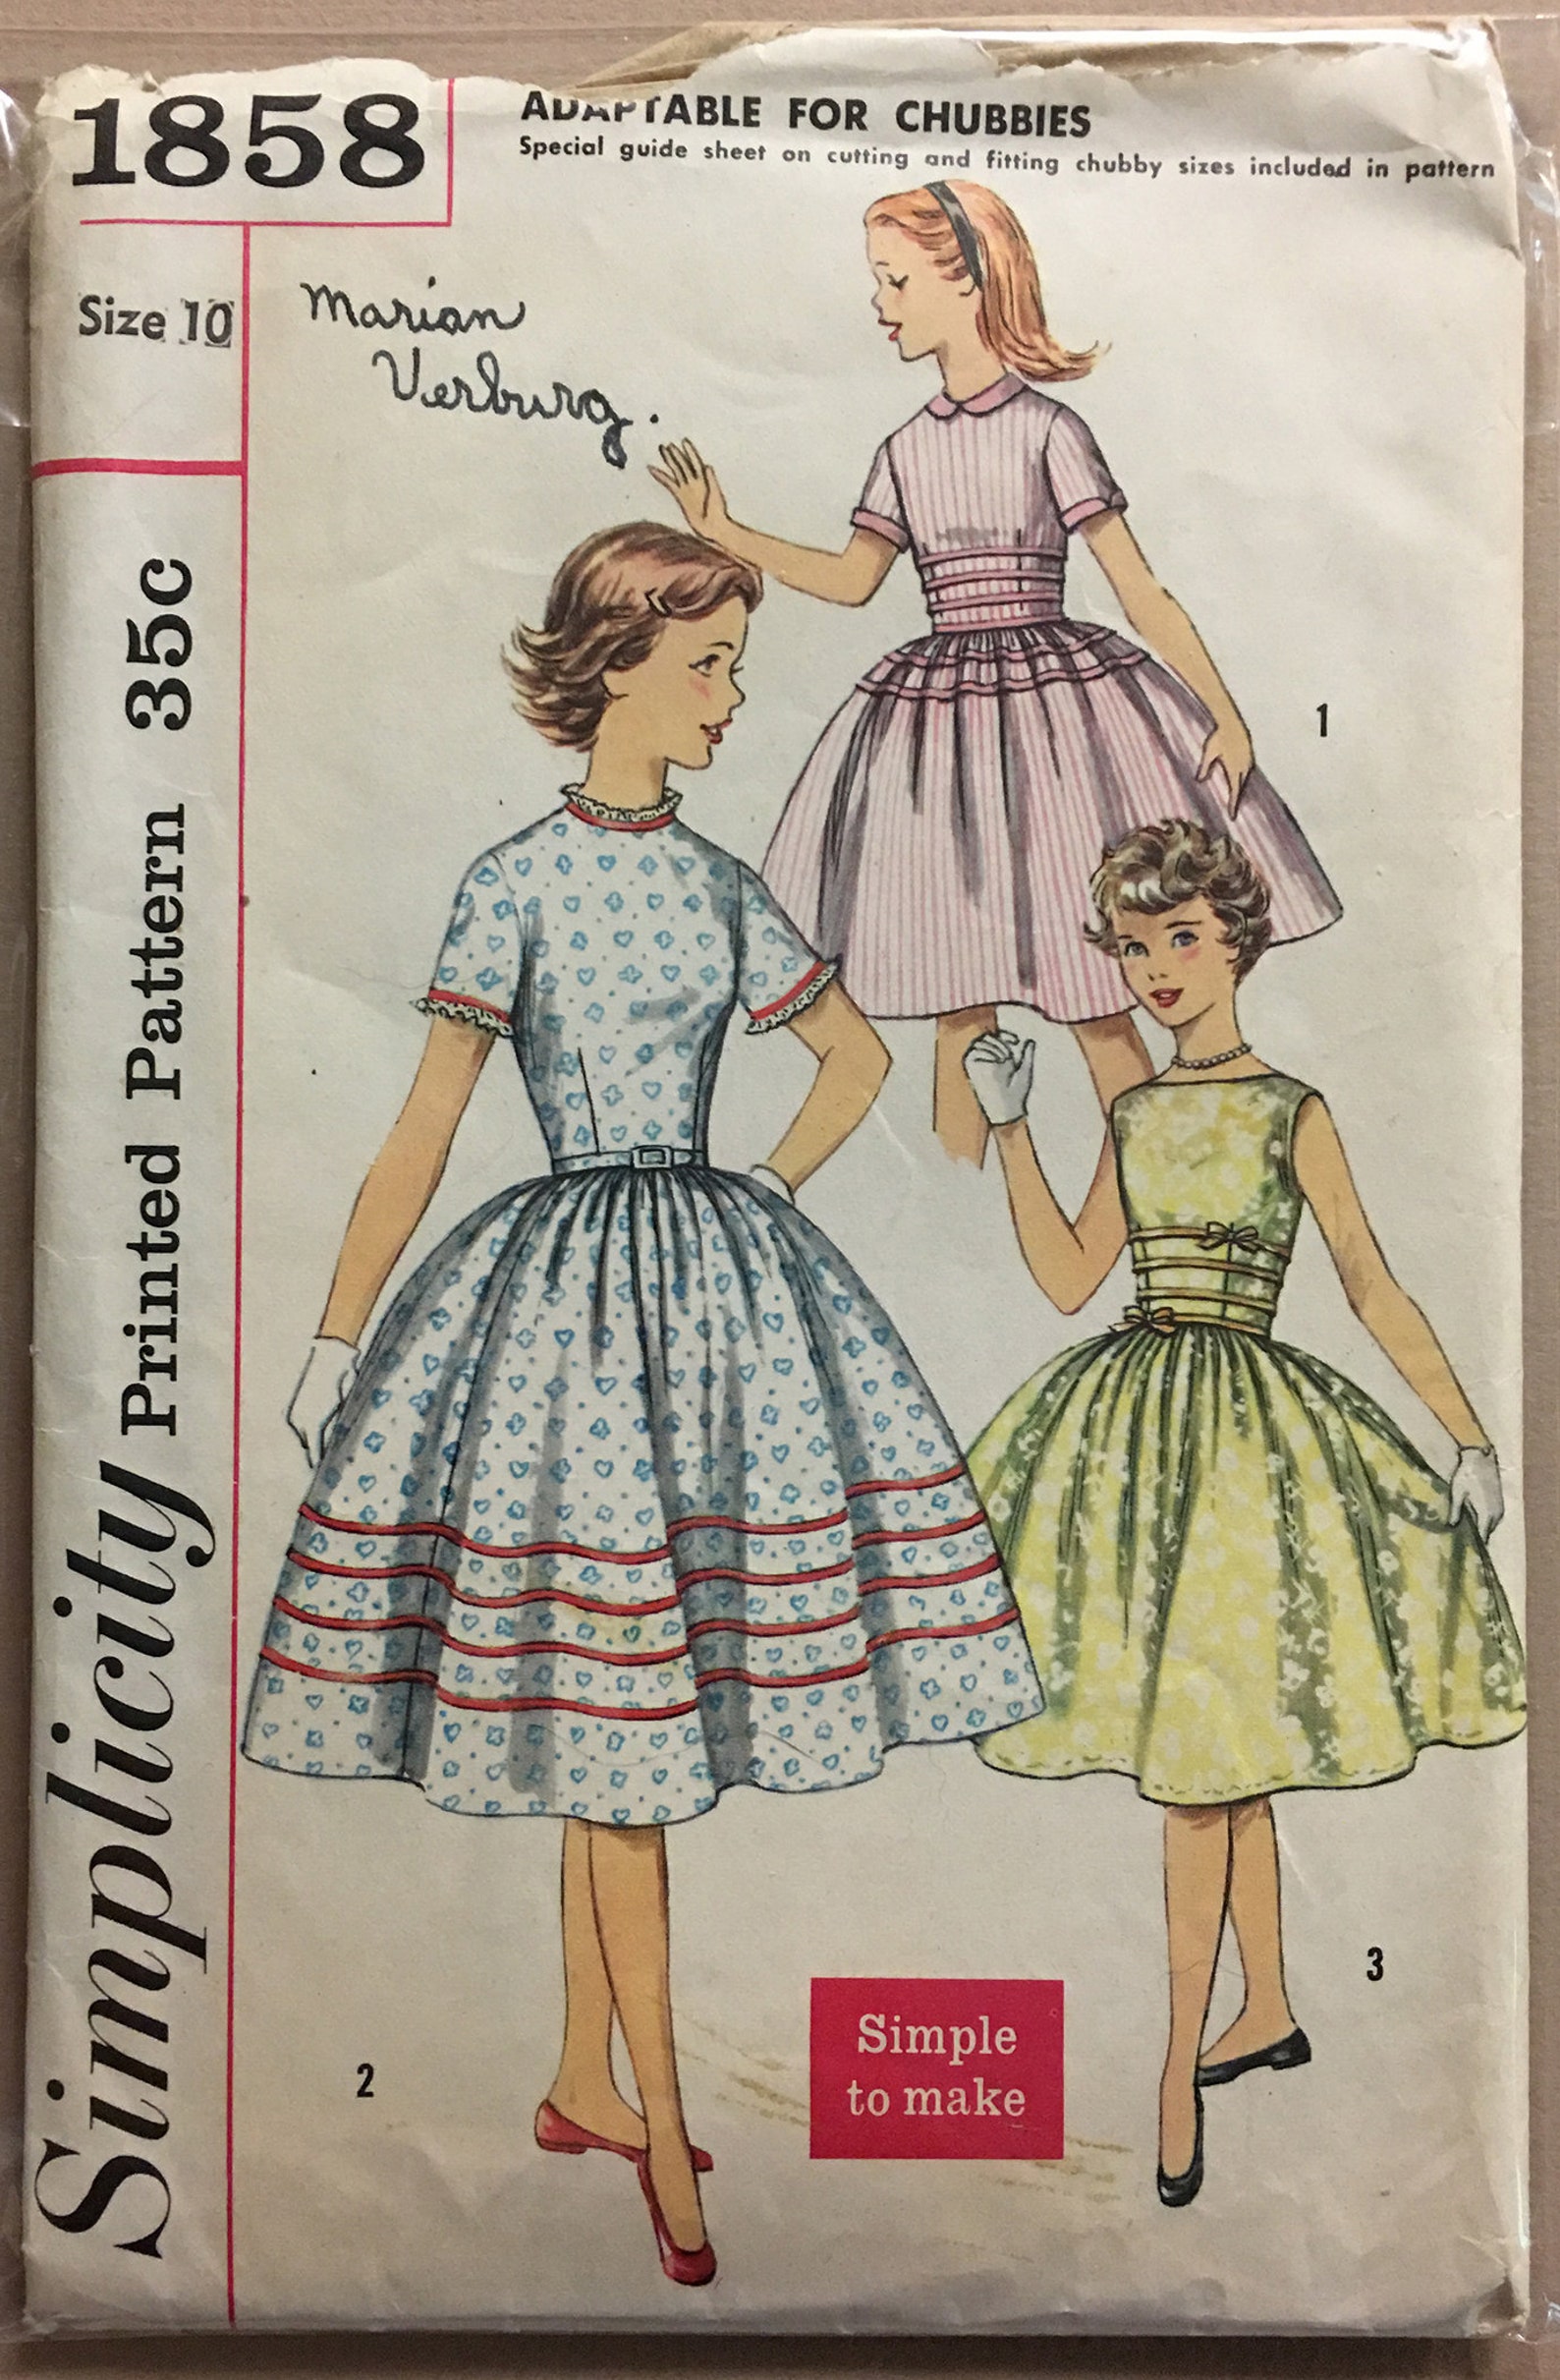 Vintage Simplicity Sewing Patterns Size 10 ©1940-50s - Etsy UK